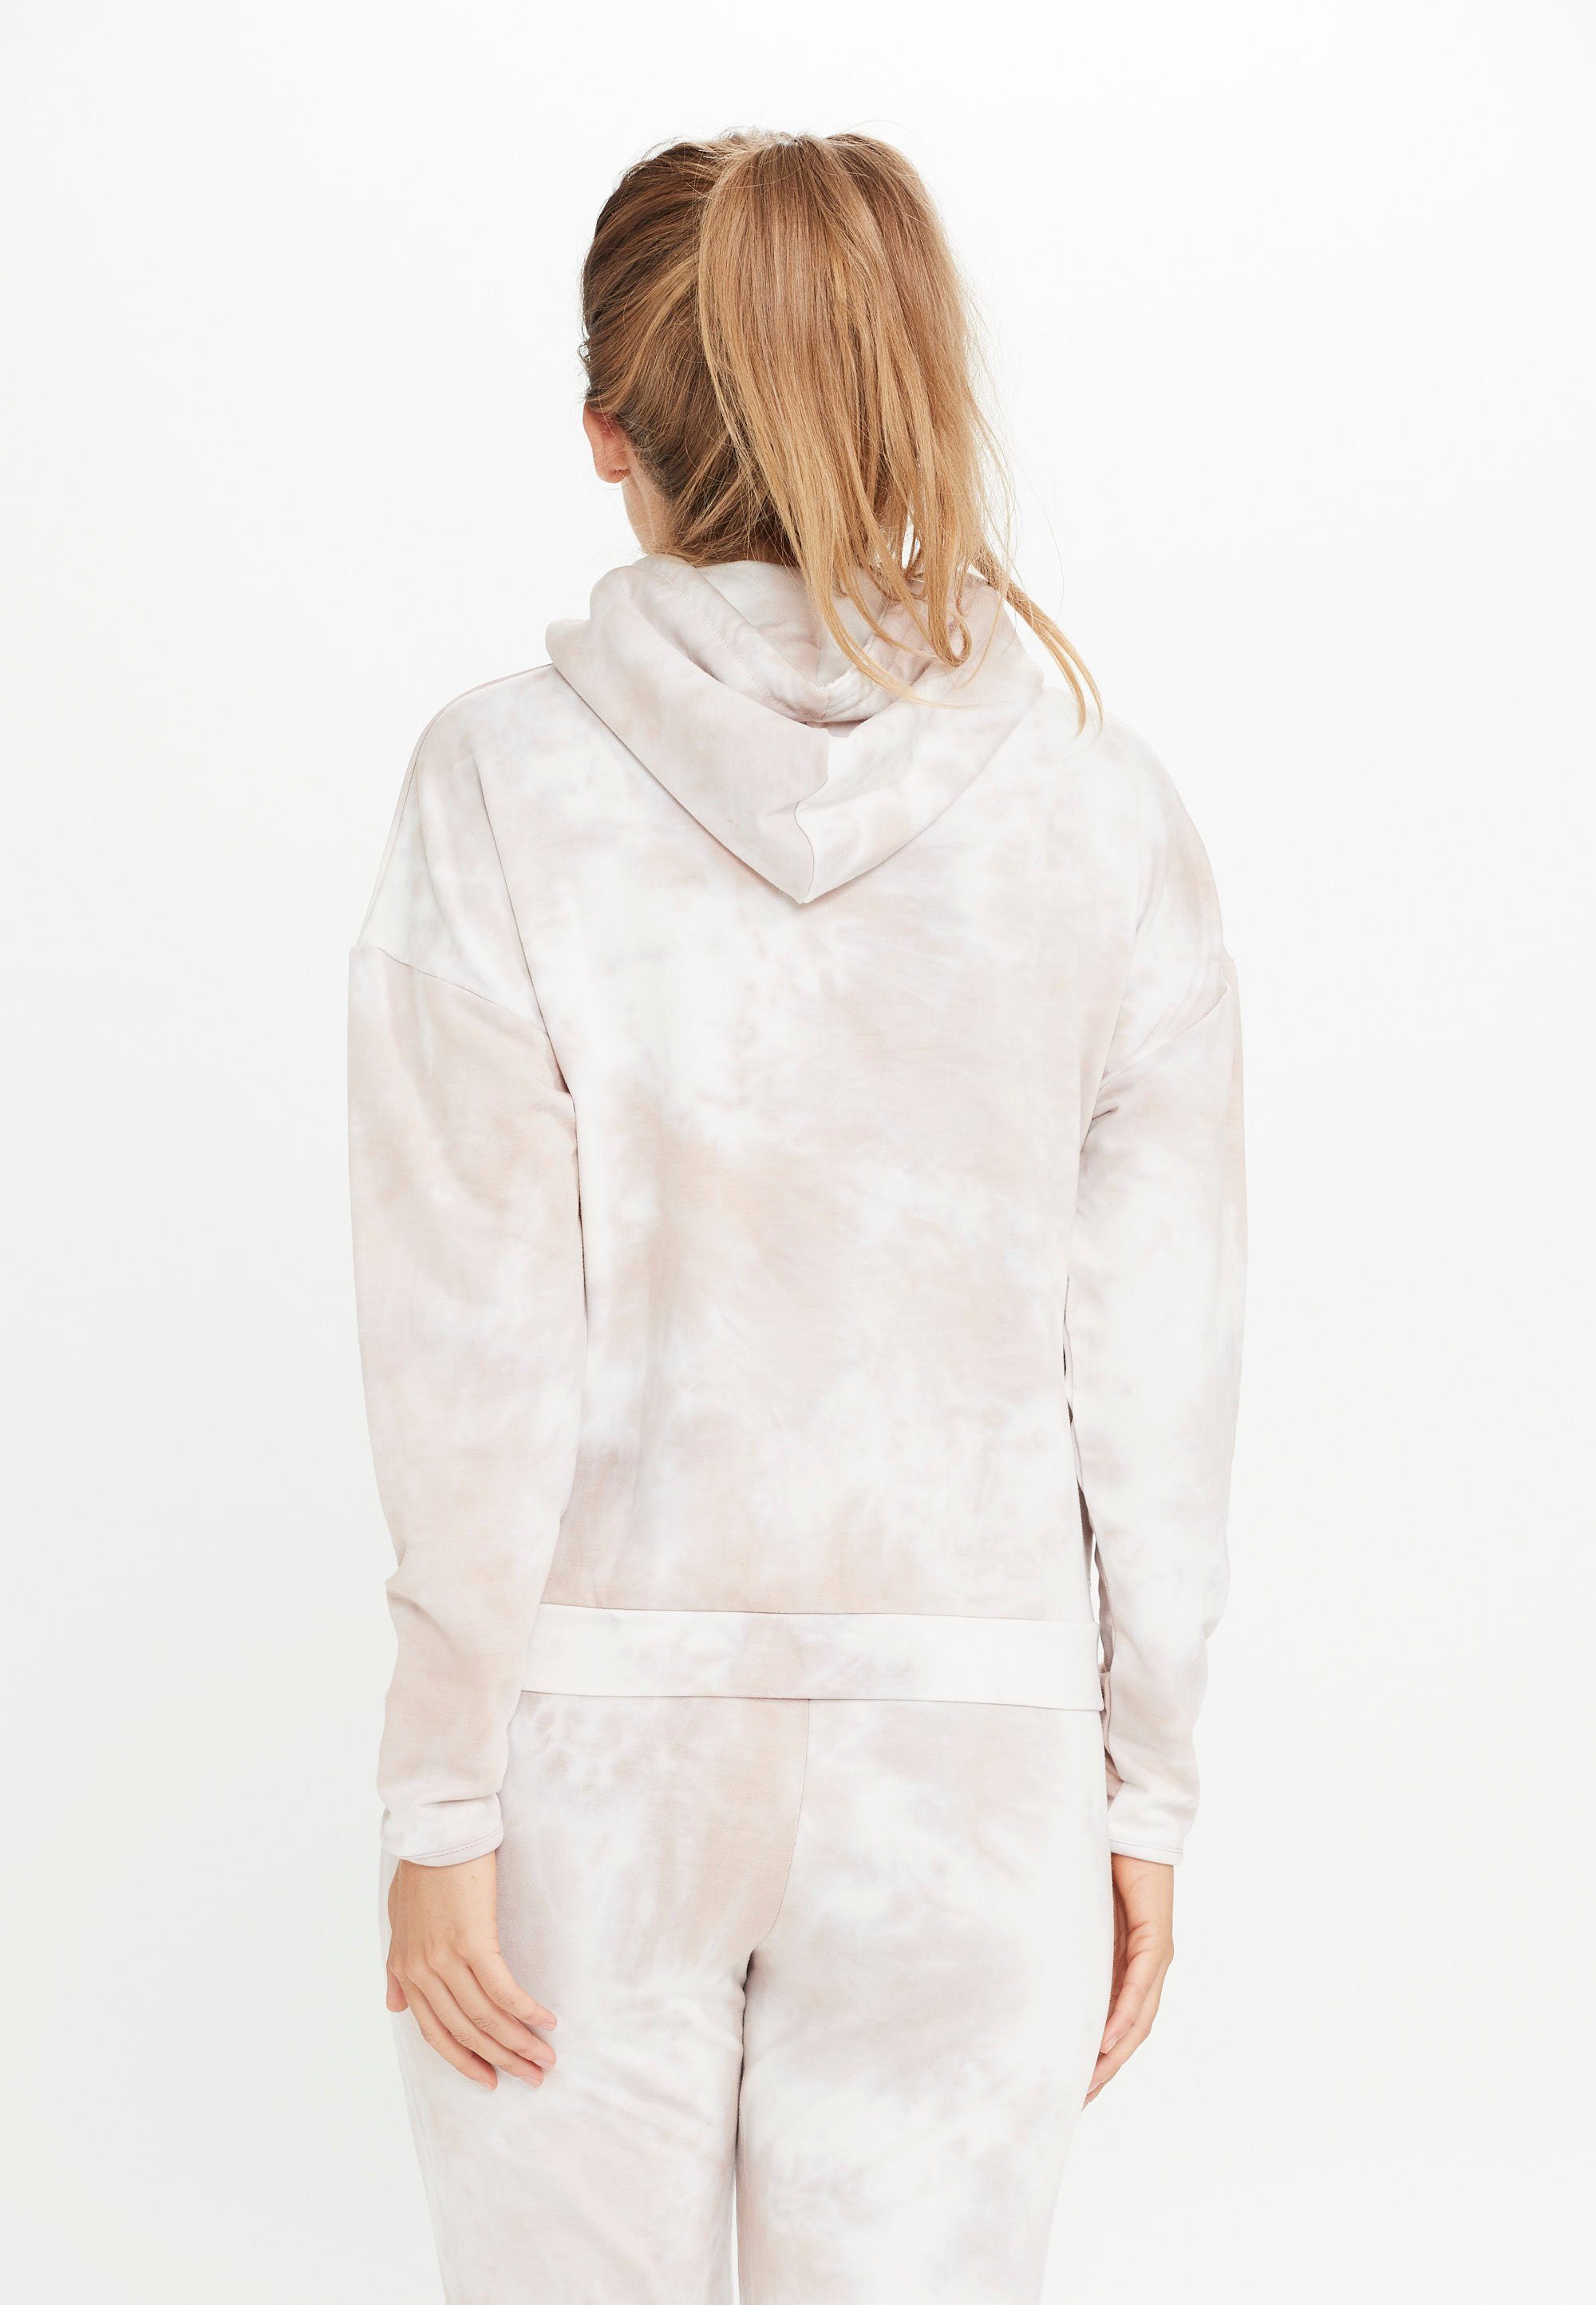 ATHLECIA Sweatshirt Reisalin mit tollem Marmor-Effekt